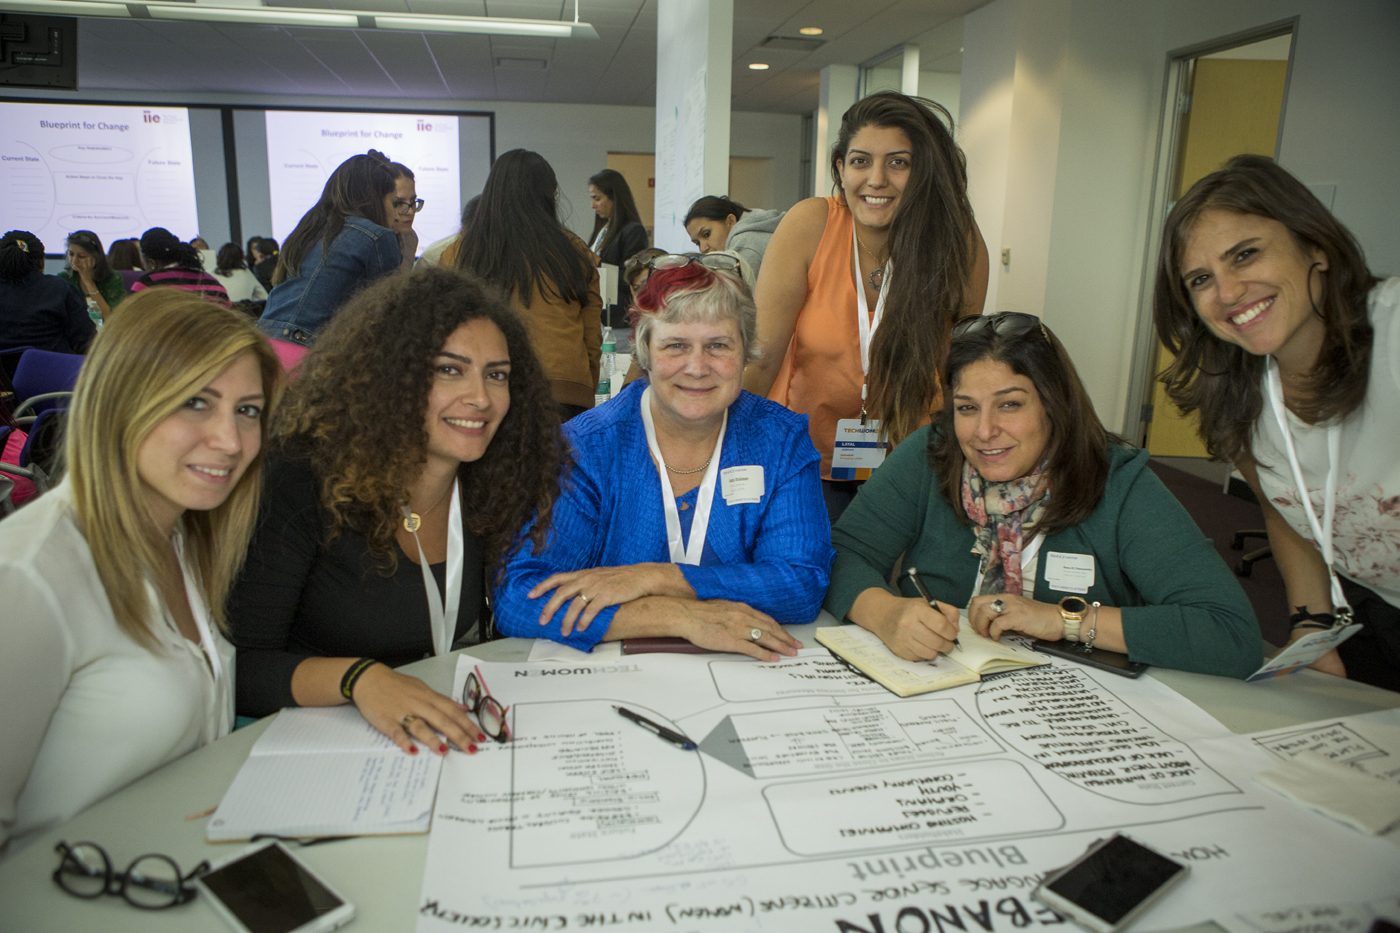 TechWomen Team Lebanon Action Plan Workshop 30 Sep 2017, photo by Saul Bromberger for TechWomen